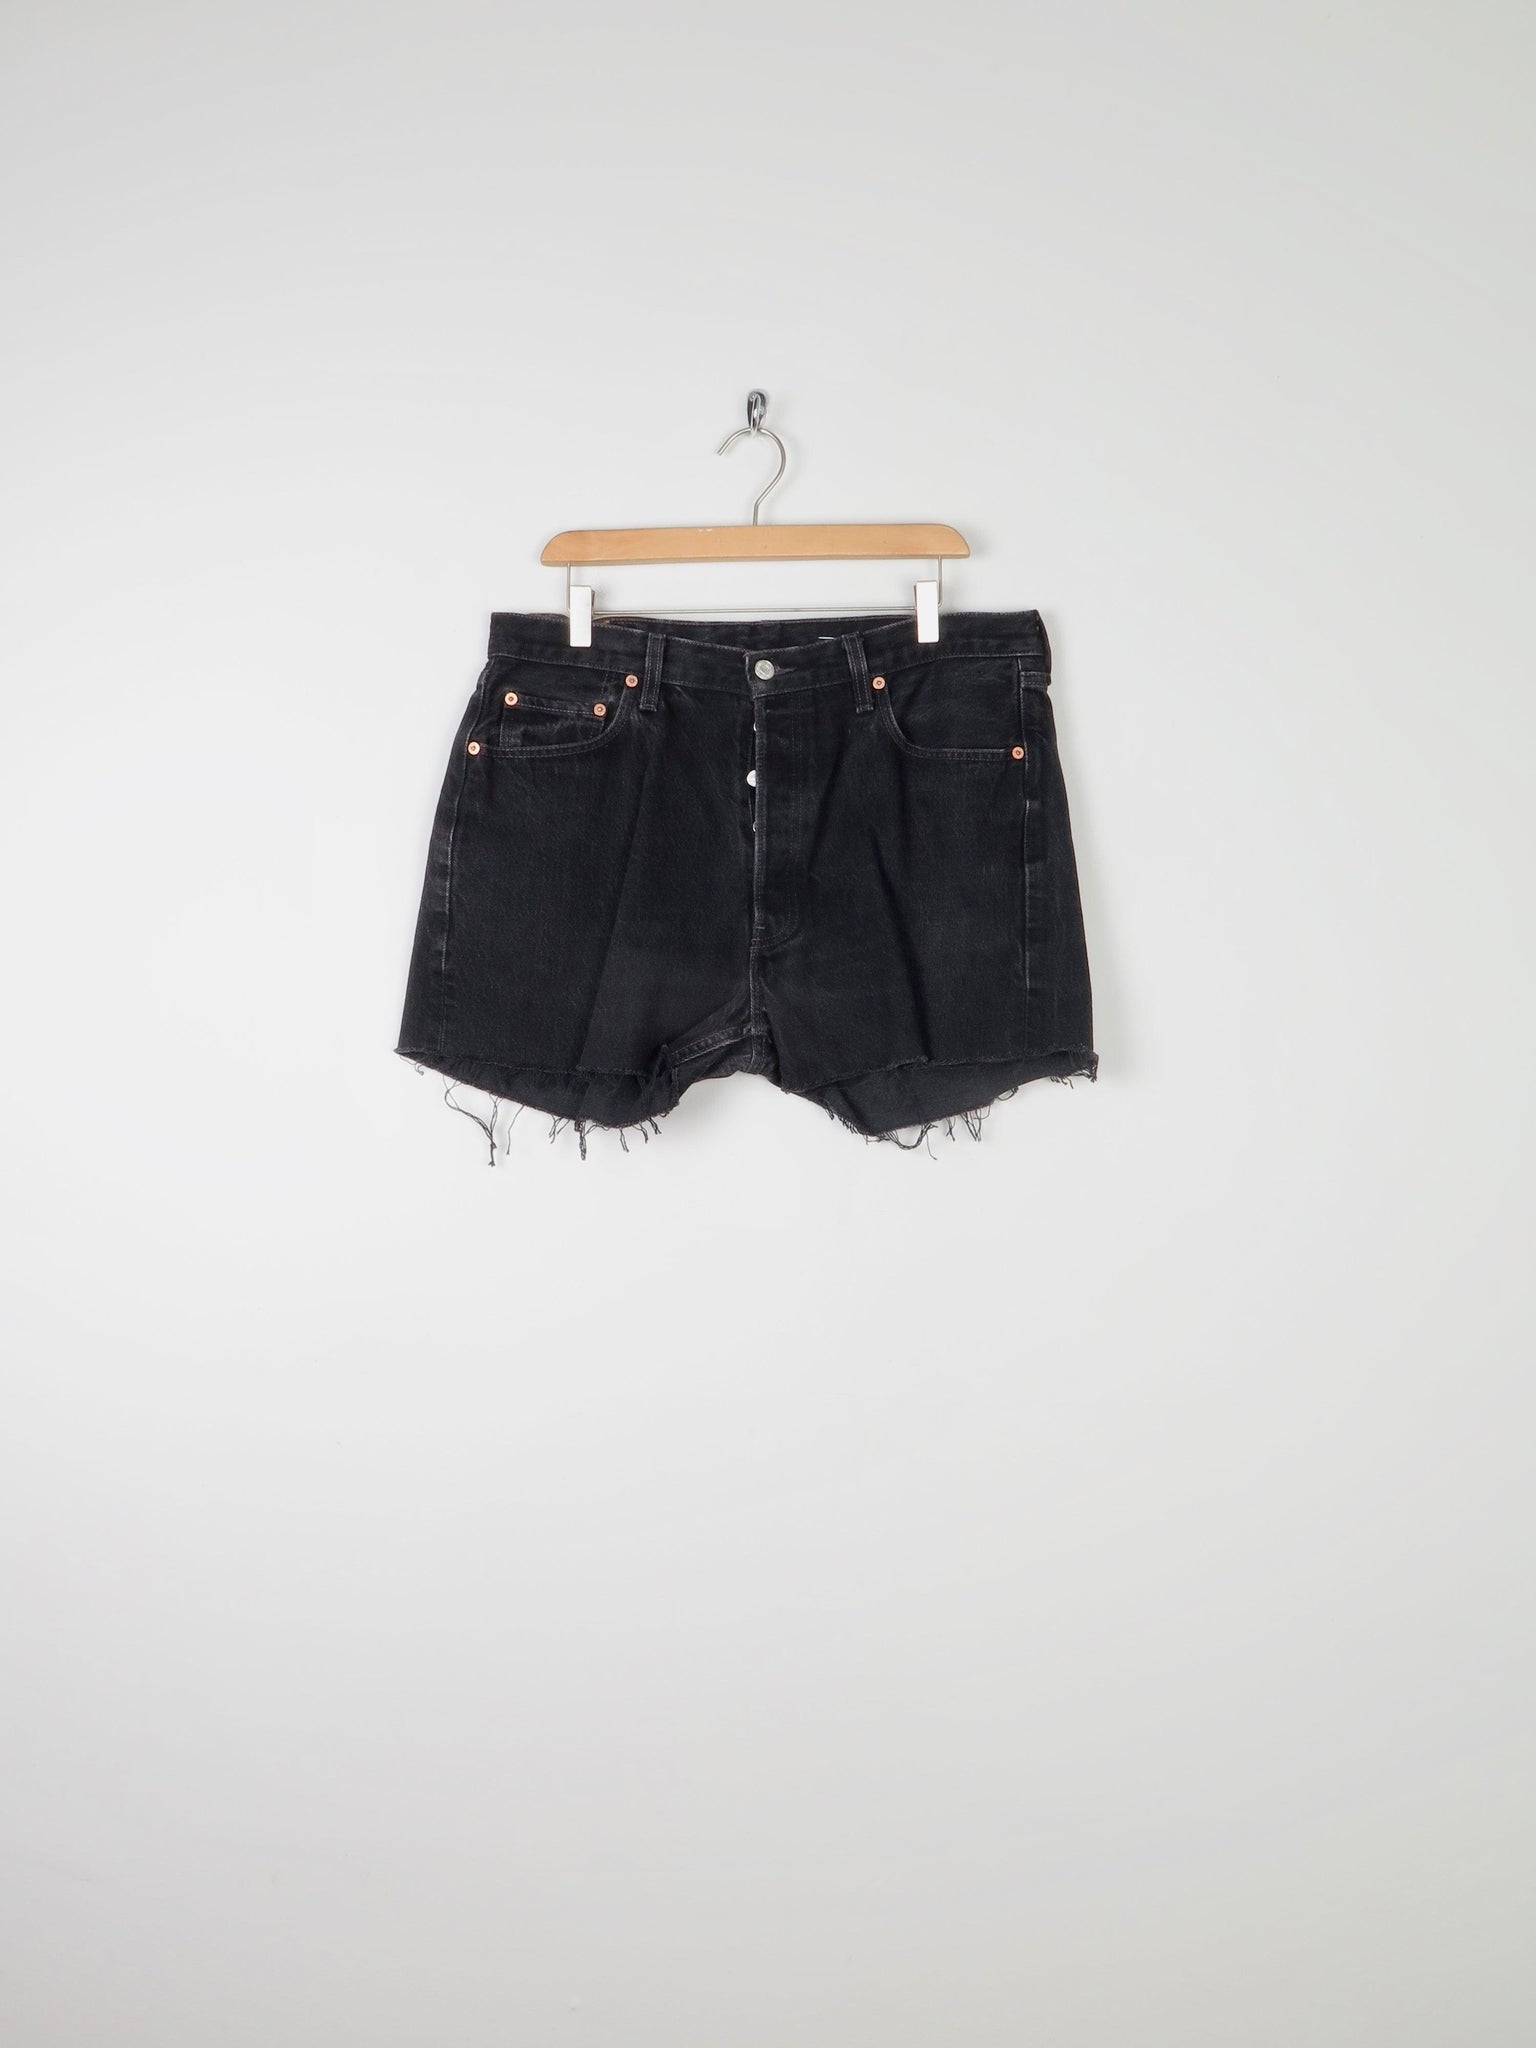 Black Levis Denim Shorts 36" XL - The Harlequin